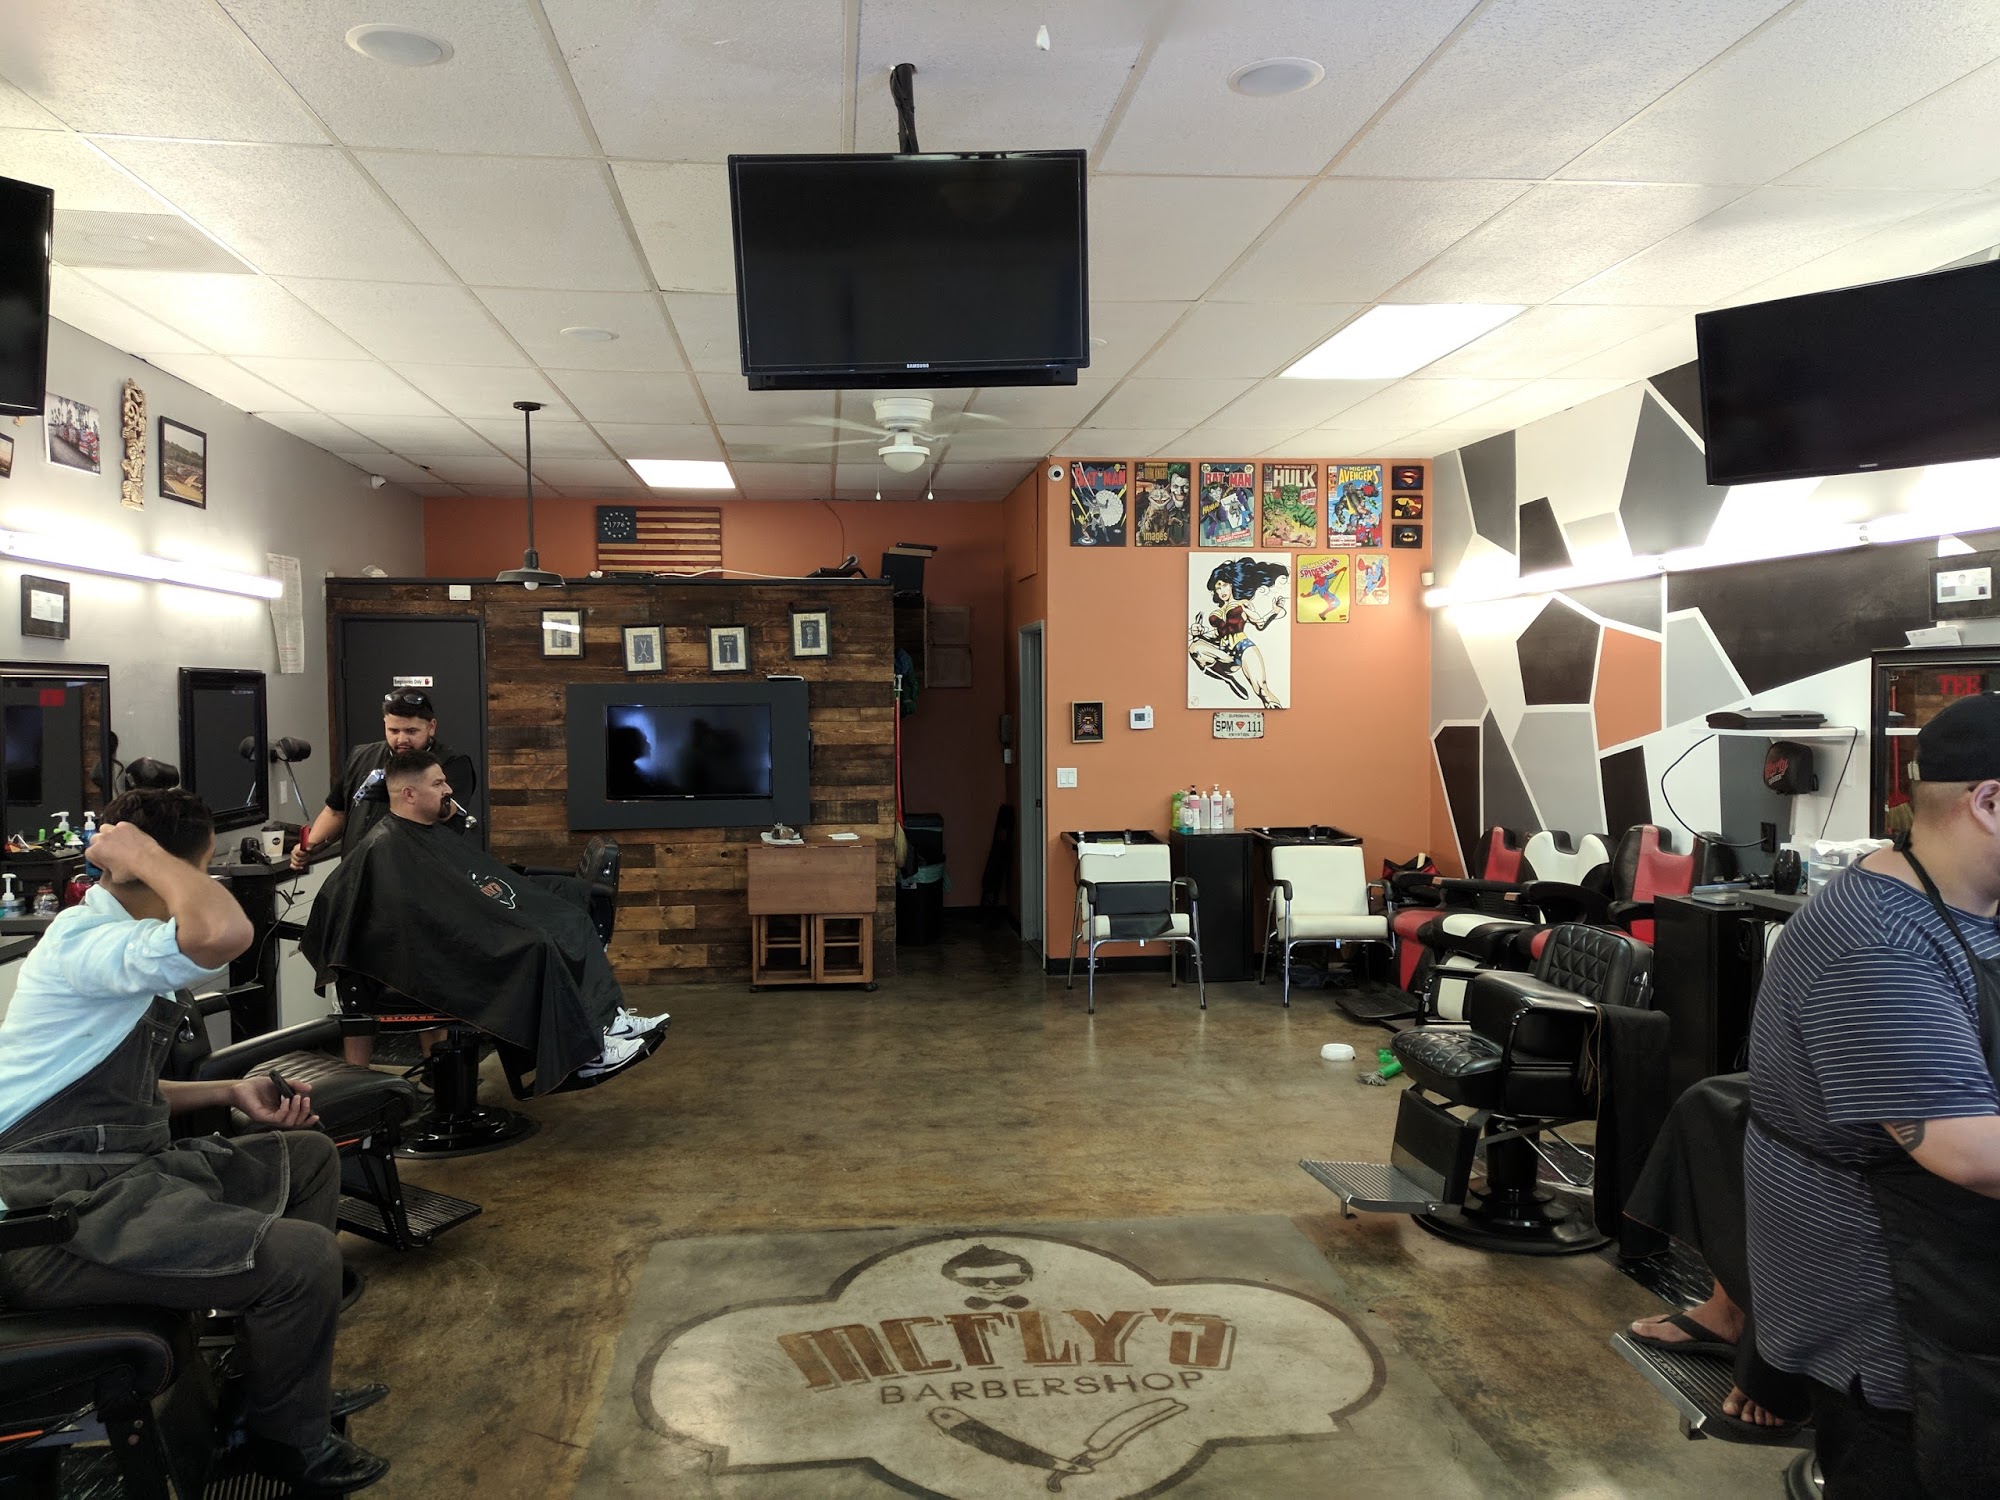 McFly's Barbershop